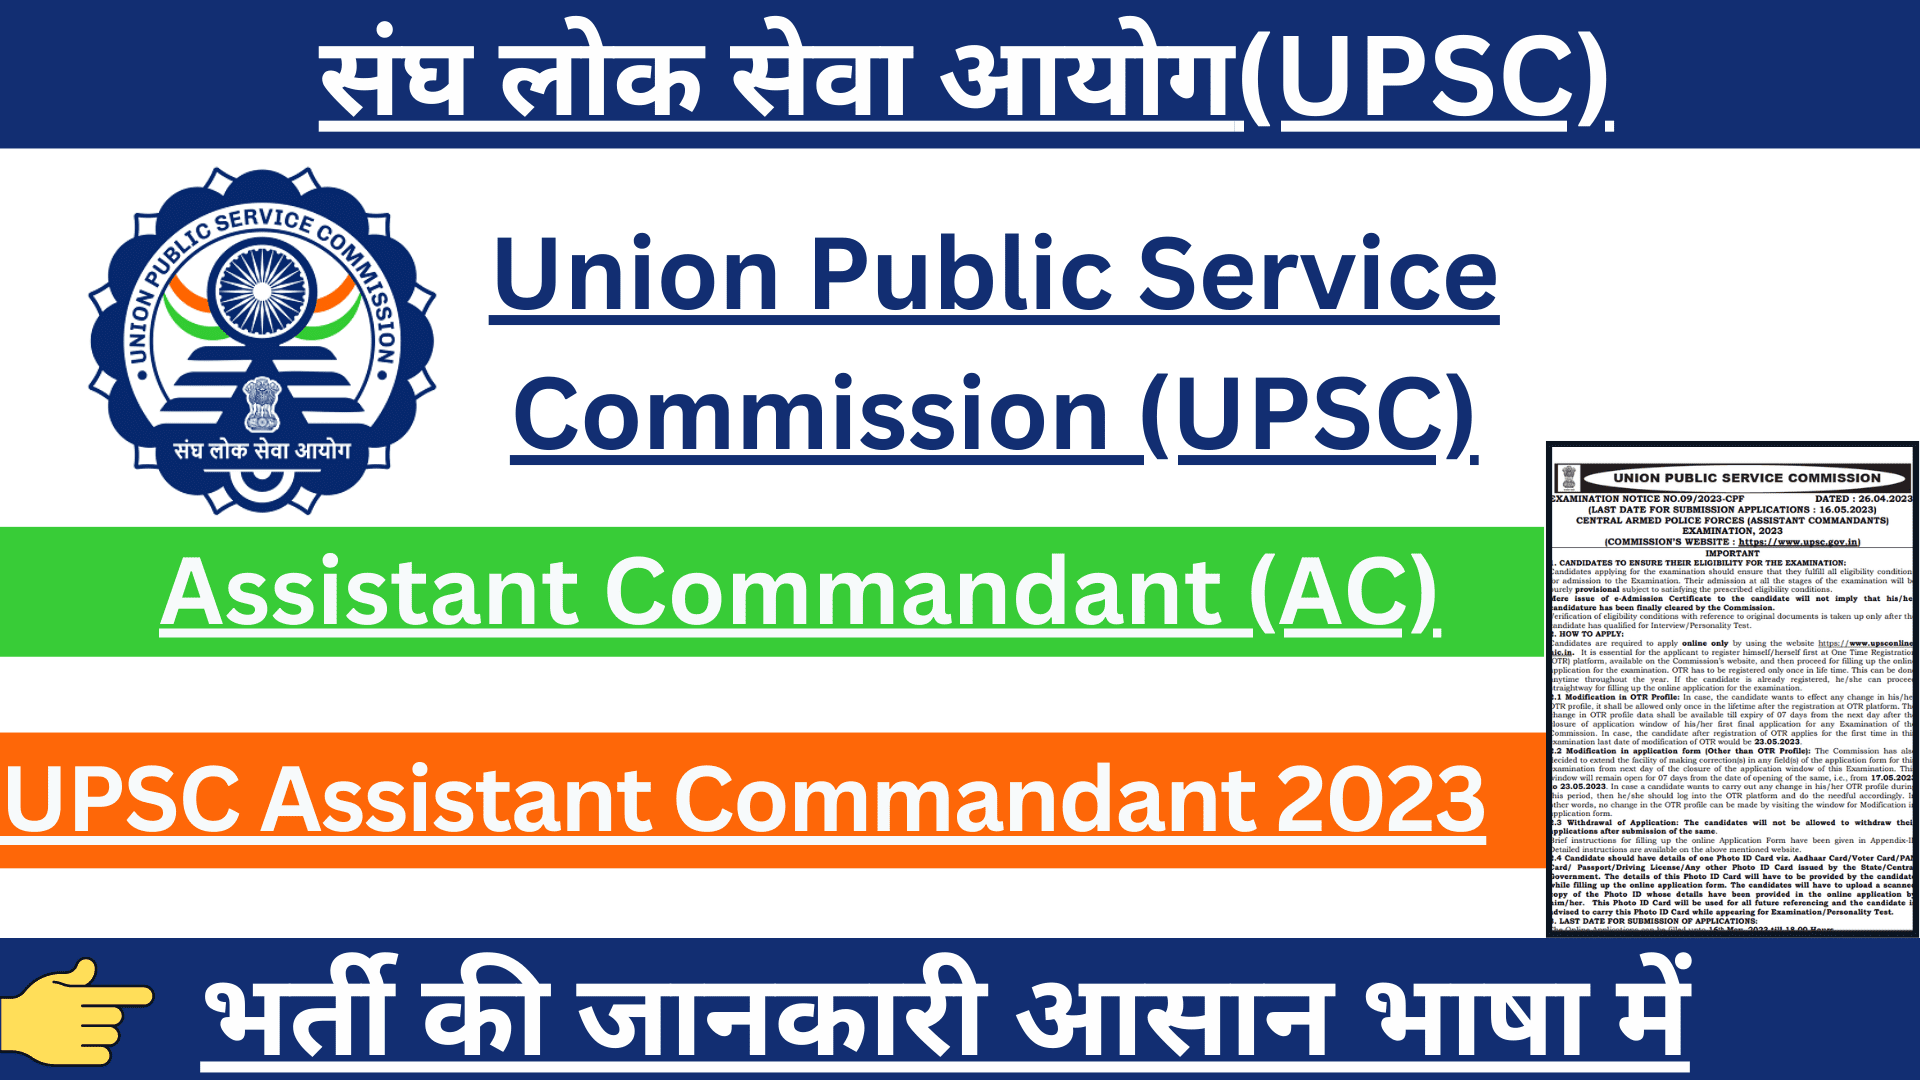 UPSC Assistant Commandant 2023